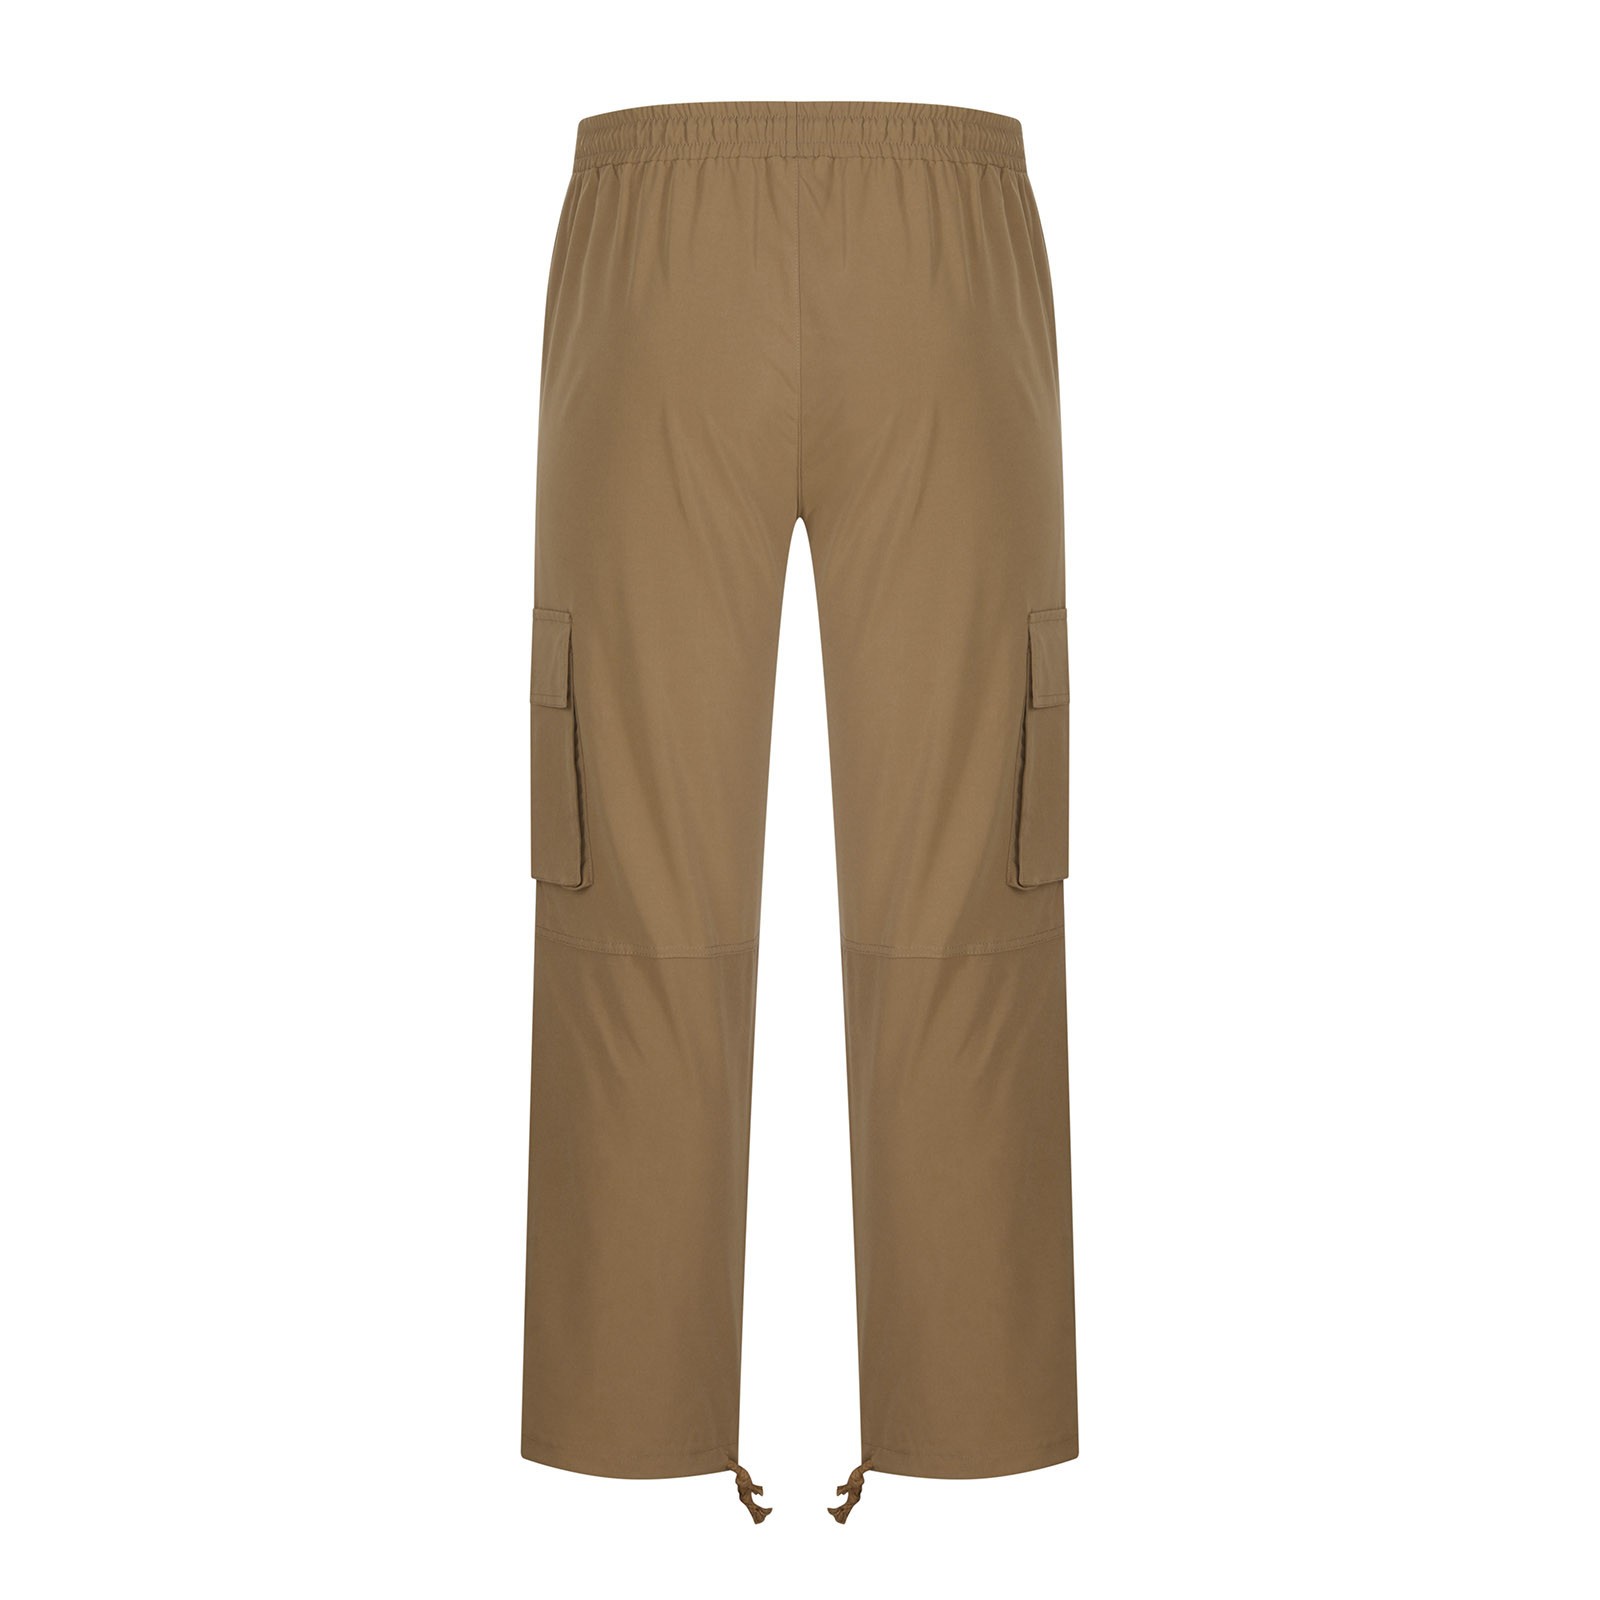 KIJBLAE Men's Cargo Pants Elastic Waist Solid Color Comfy Lounge Casual ...